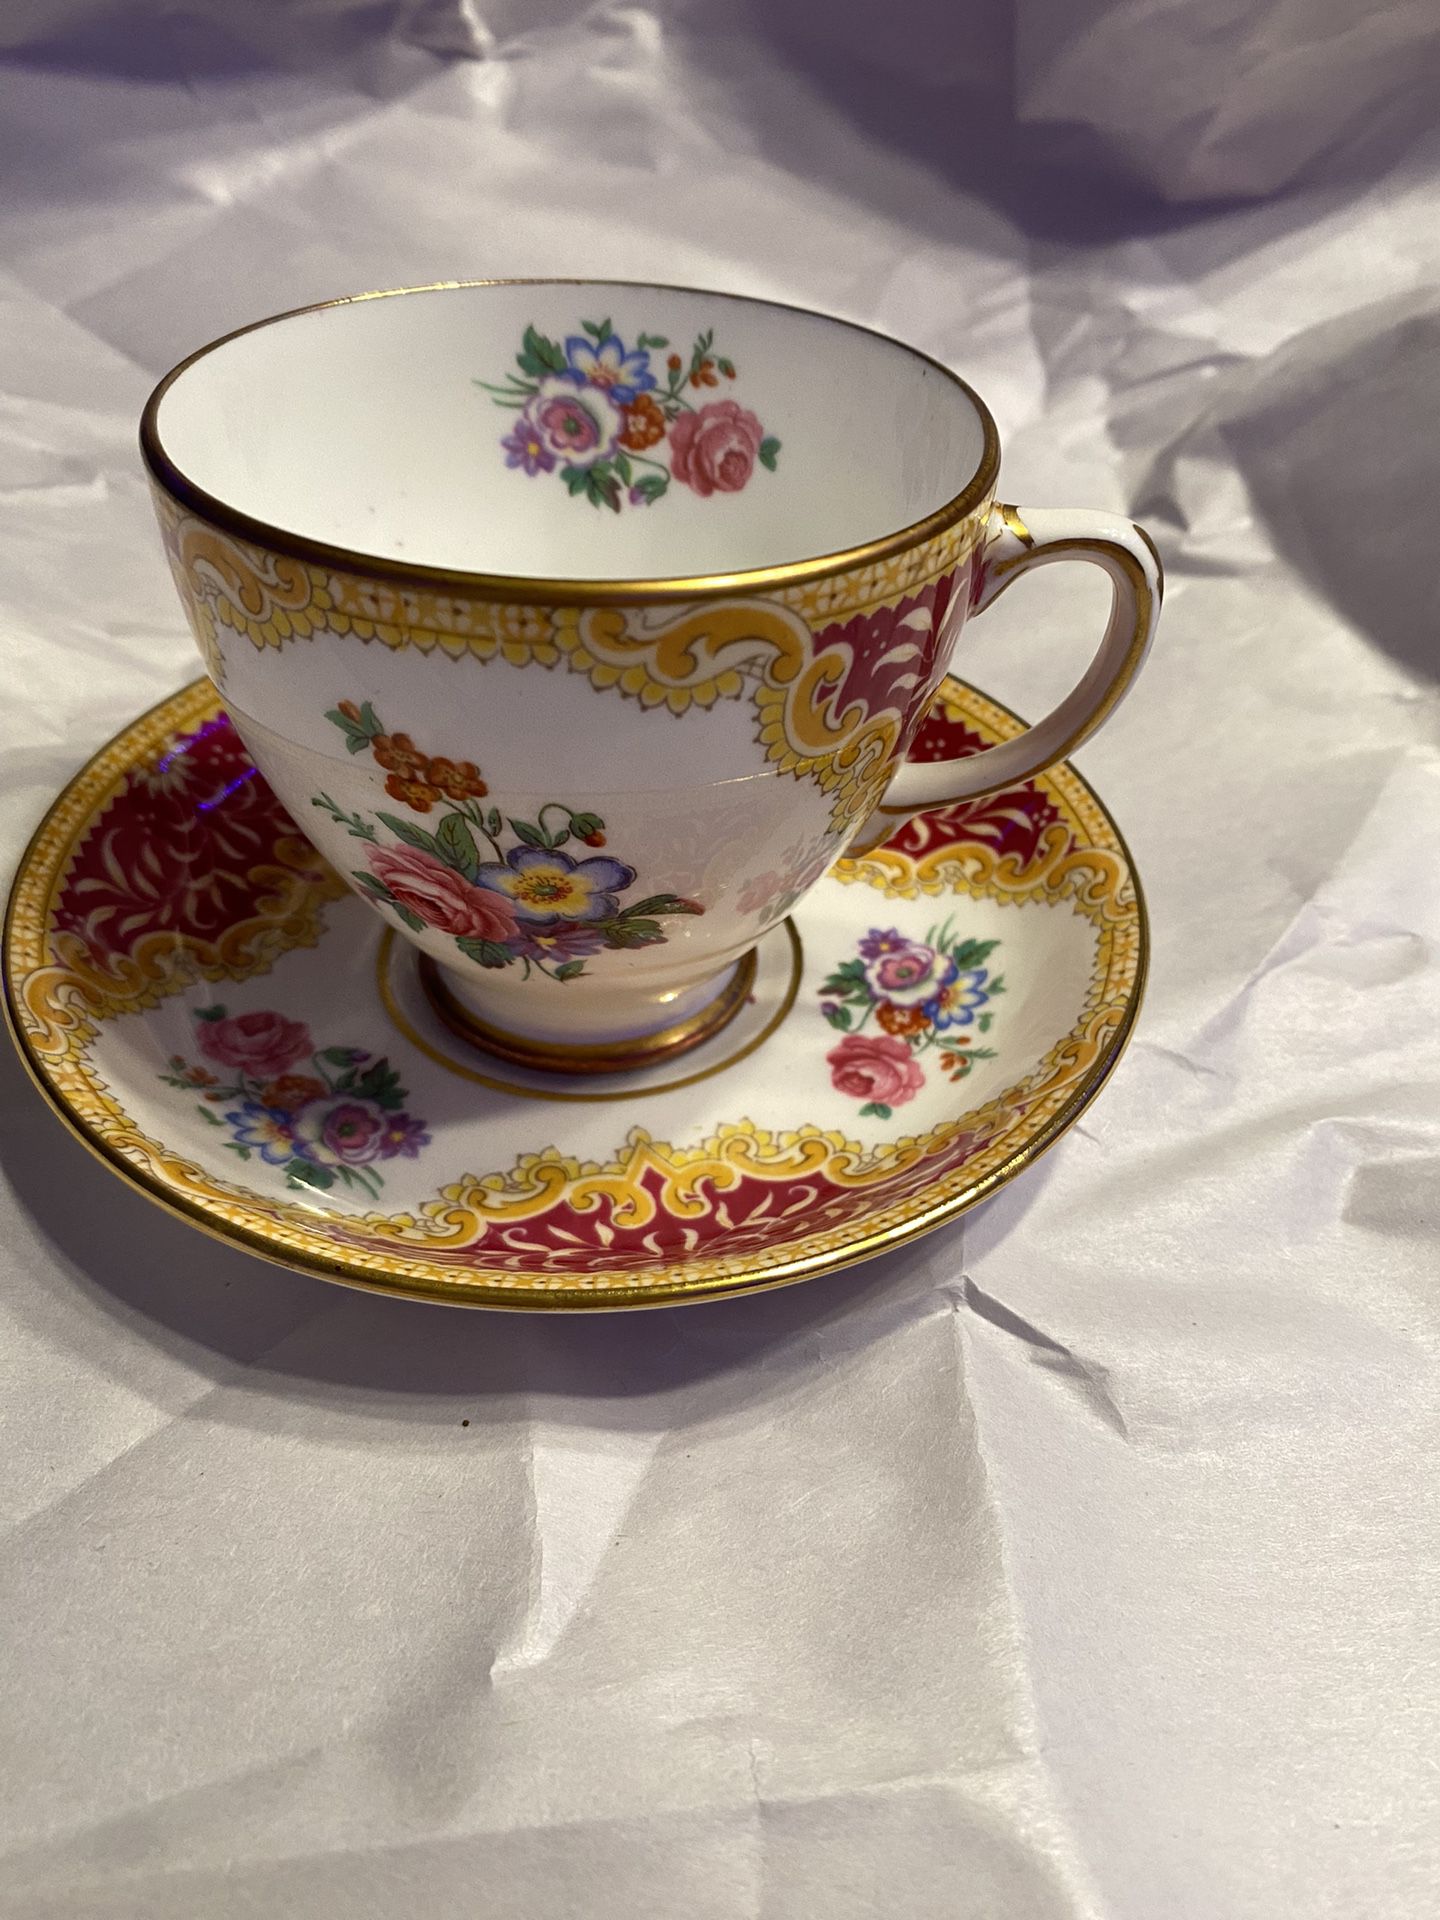 Old Royal China Teacup 